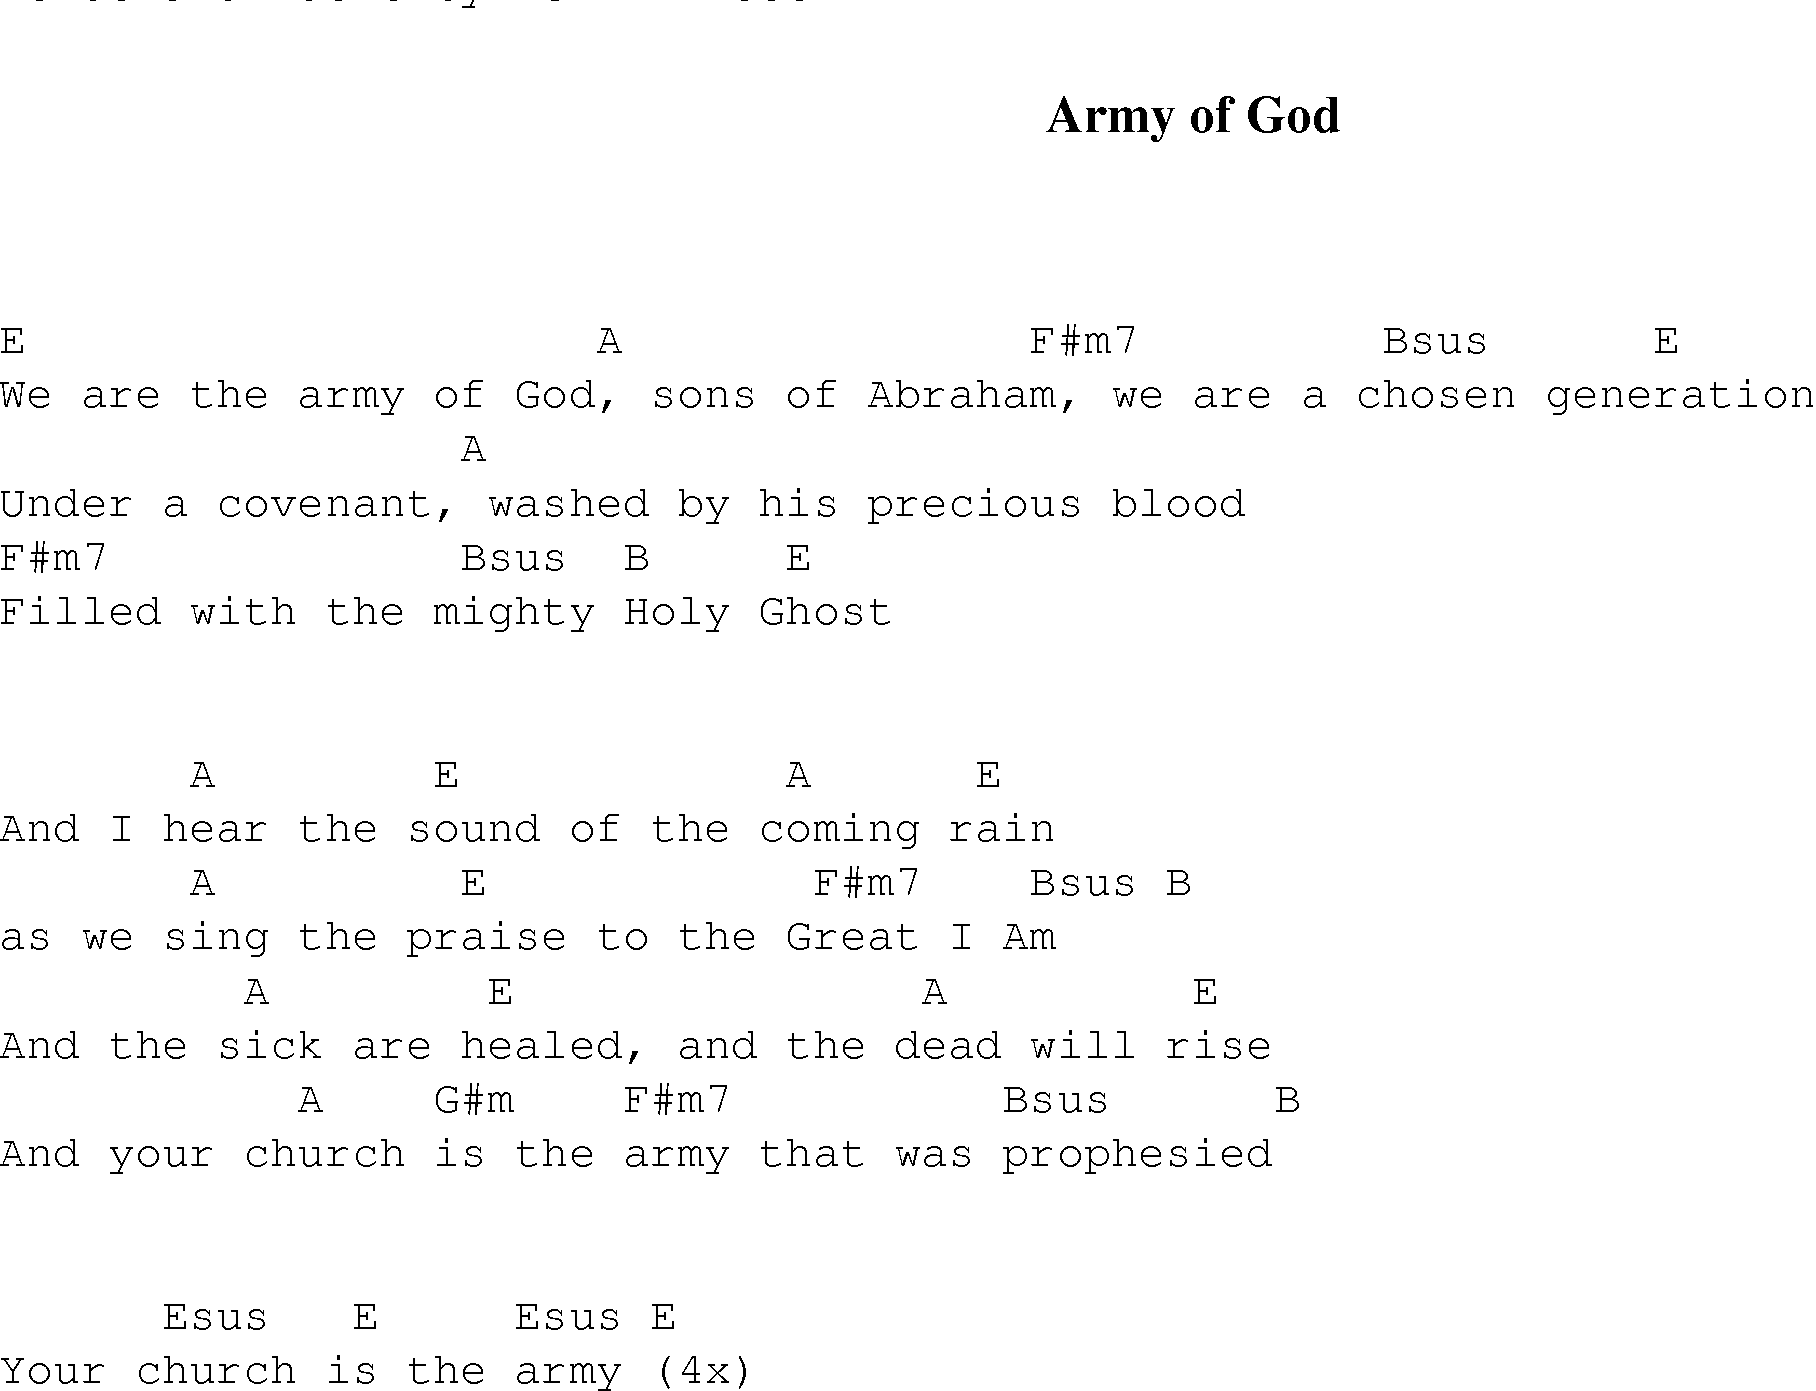 Gospel Song: army_of_god, lyrics and chords.